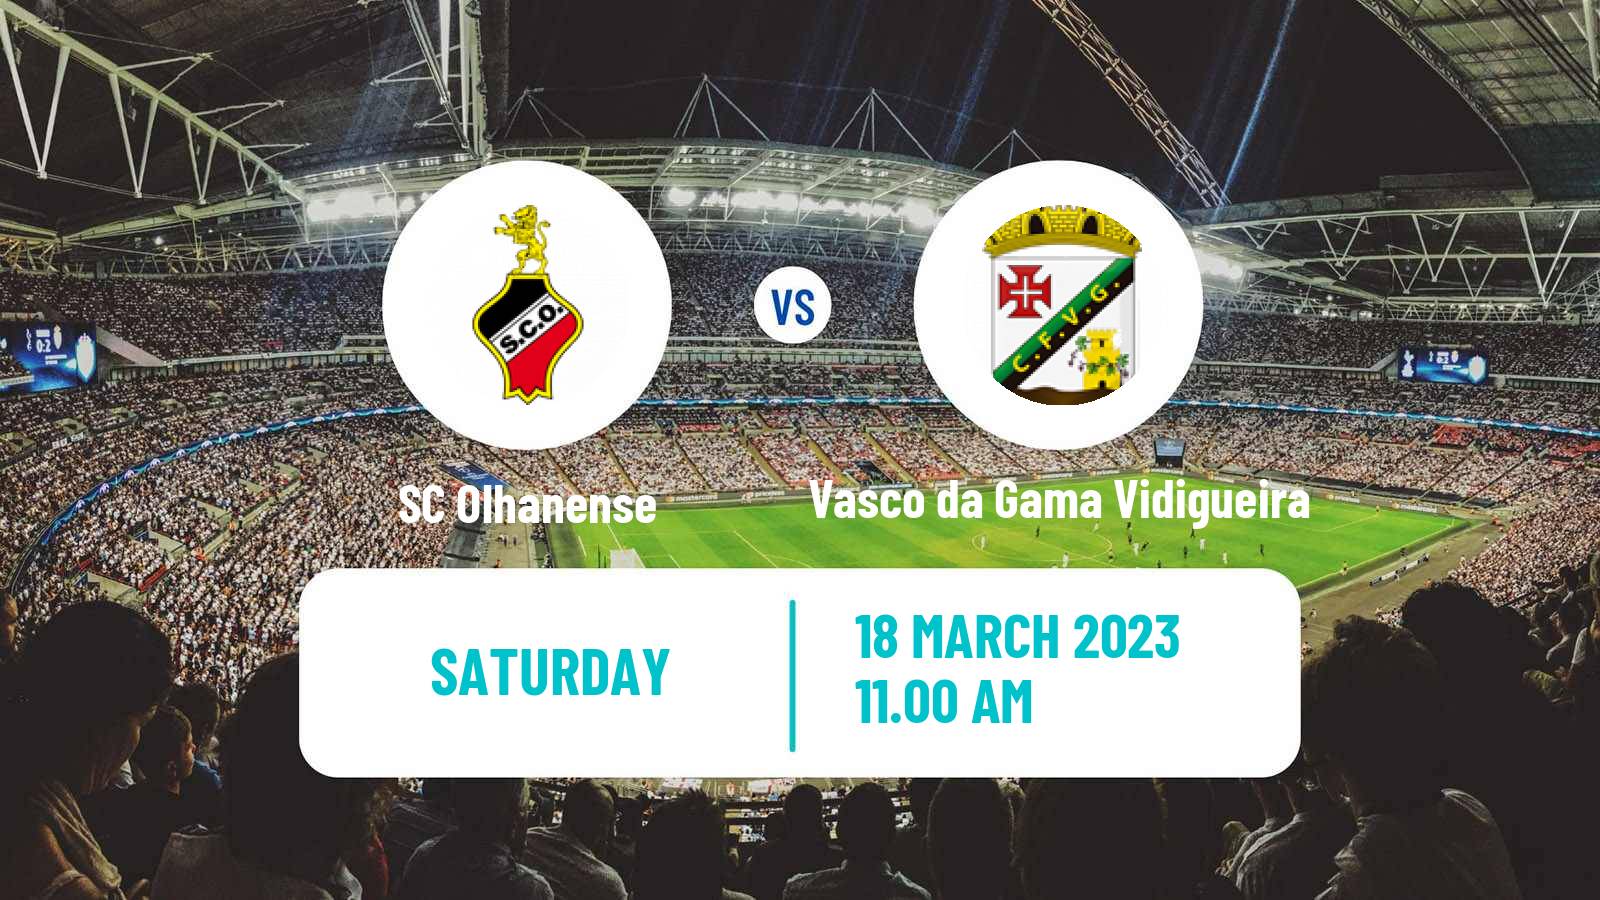 Soccer Campeonato de Portugal Olhanense - Vasco da Gama Vidigueira